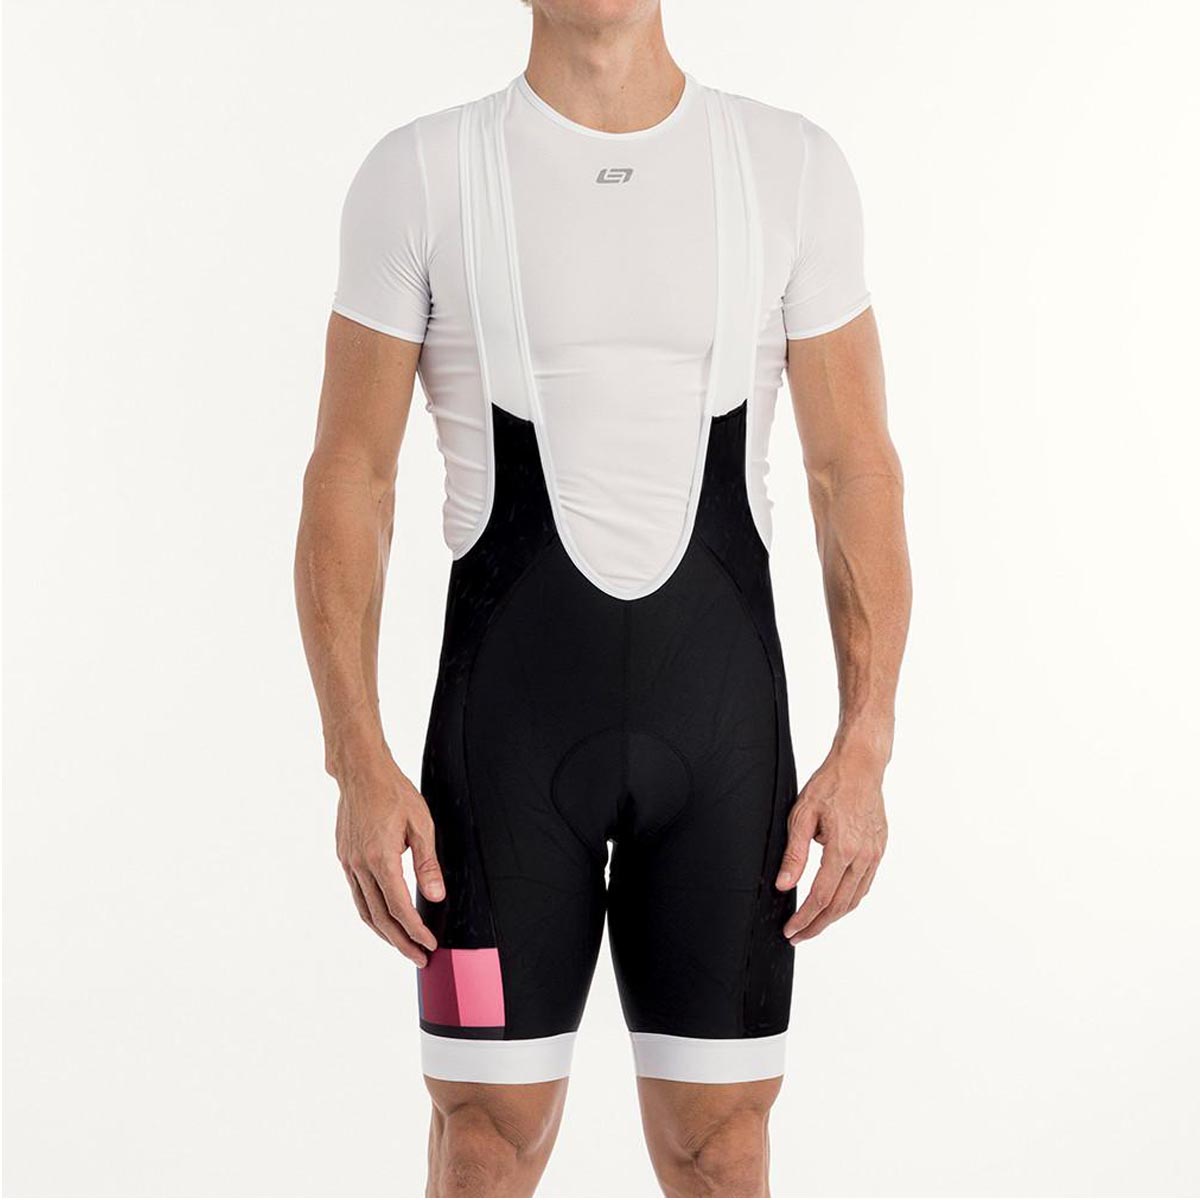 white cycling bib shorts